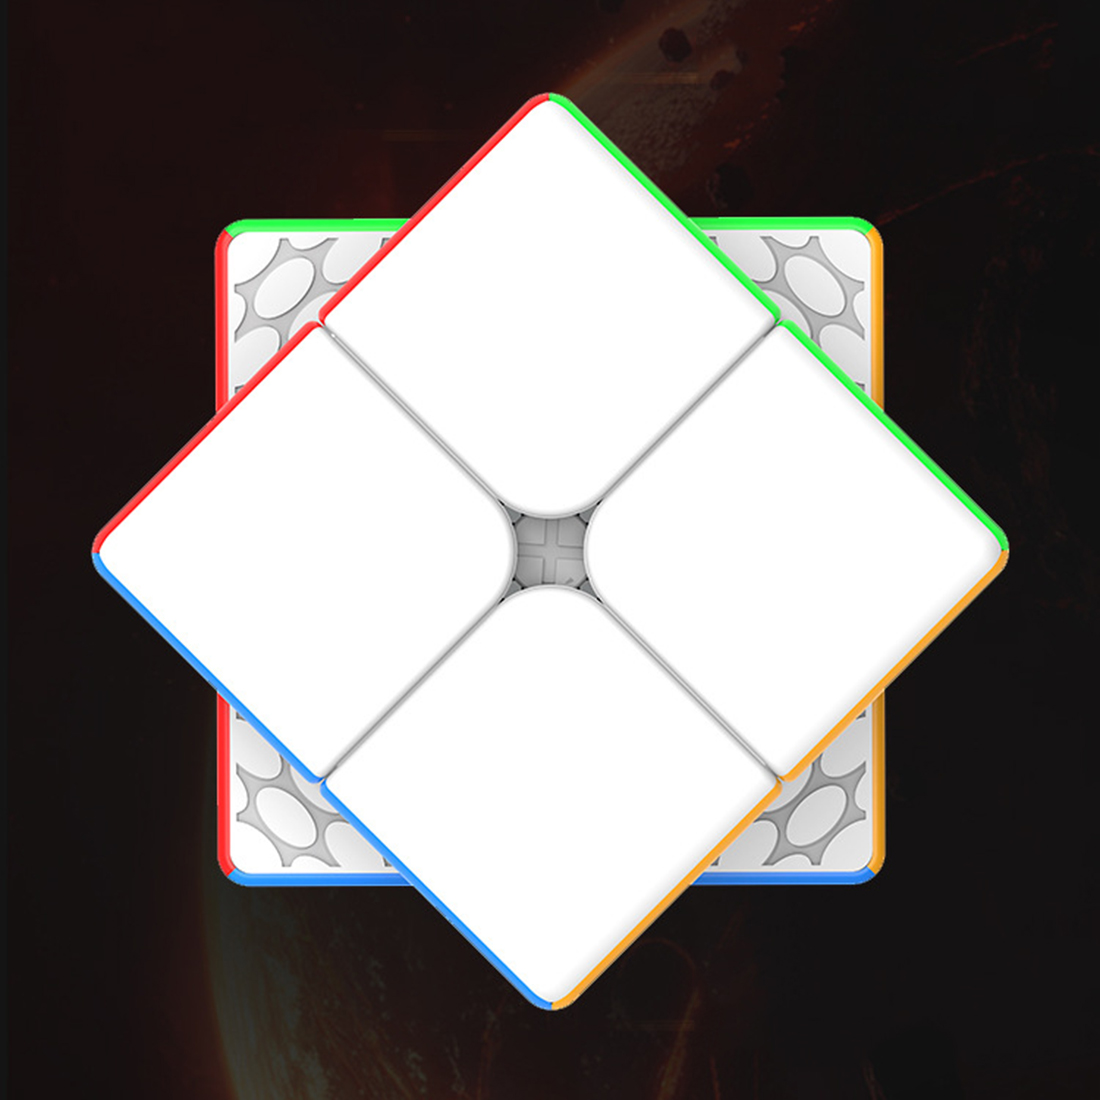 Diansheng Solar System 2x2 Magnetic Speed Cube